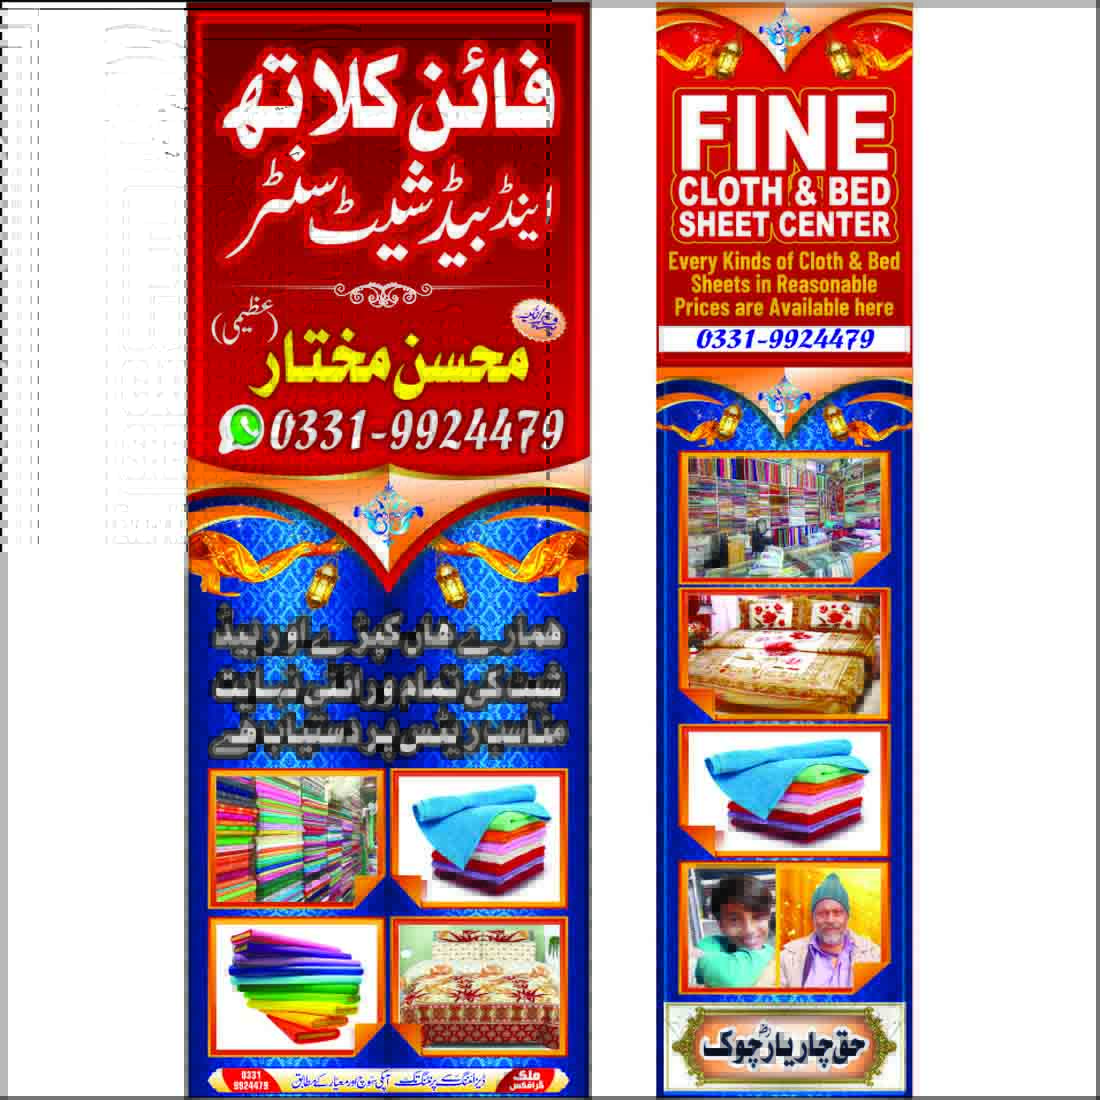 standee portrait graphic design Urdu sample preview image.